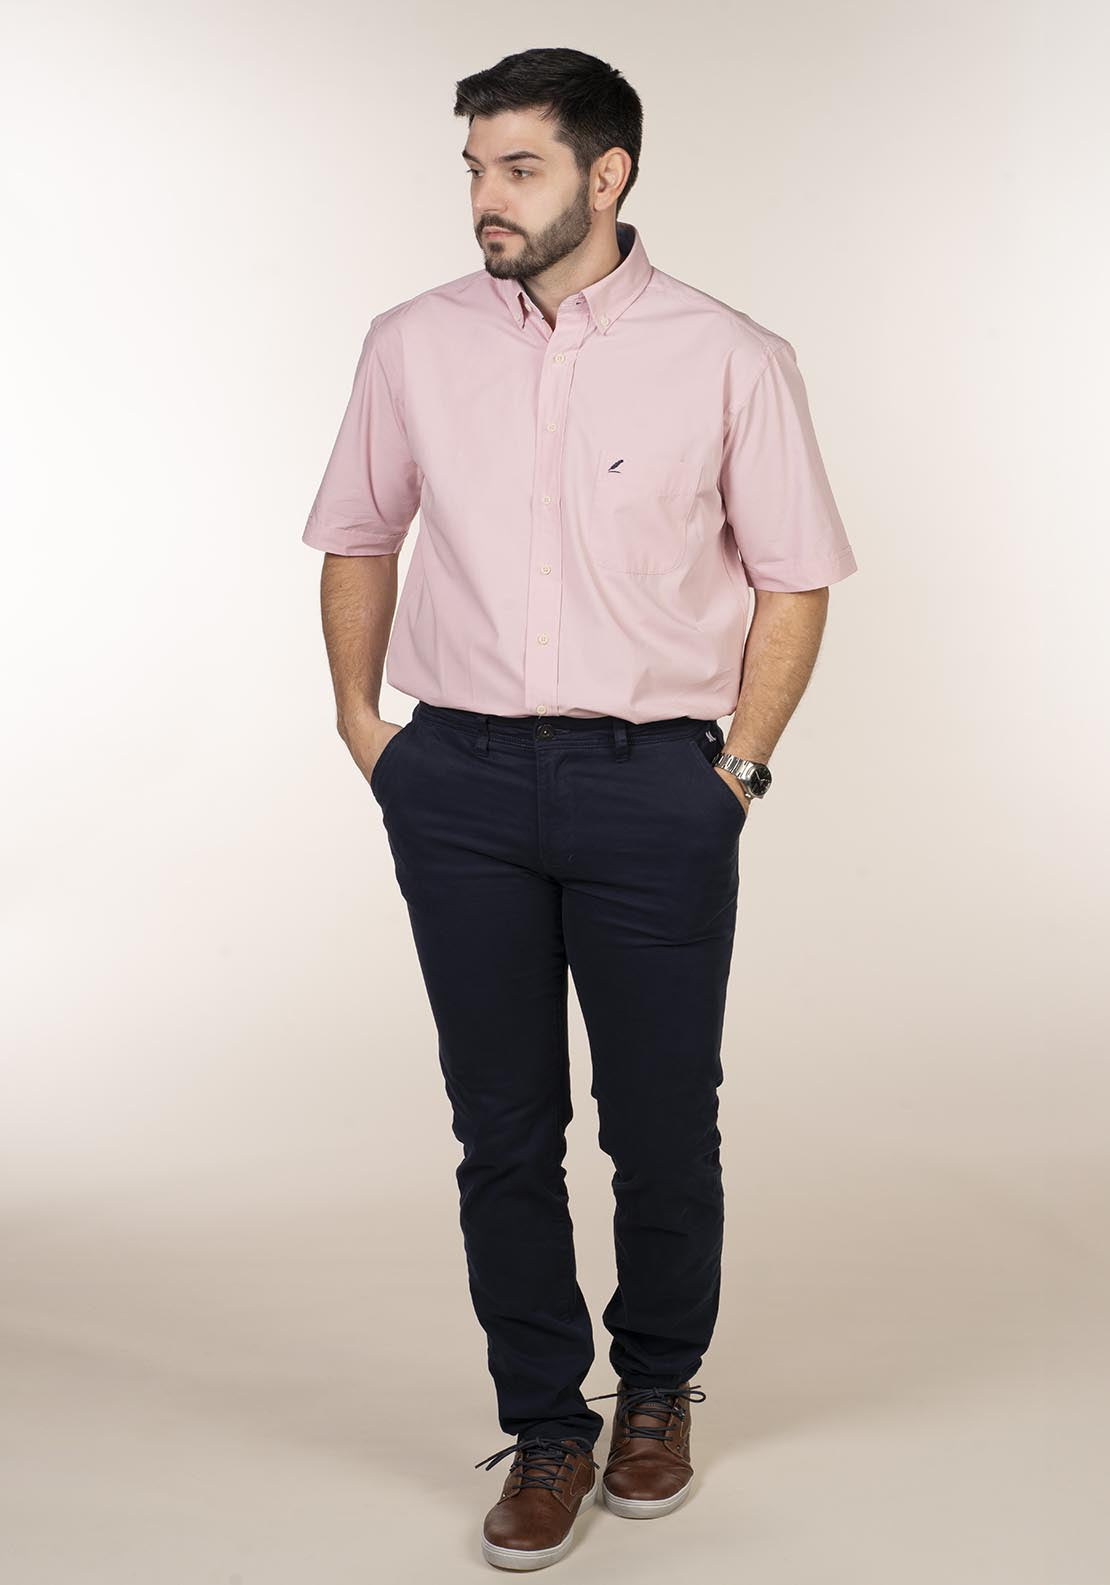 Yeats Casual Plain Short Sleeve Shirt - Pink 2 Shaws Department Stores